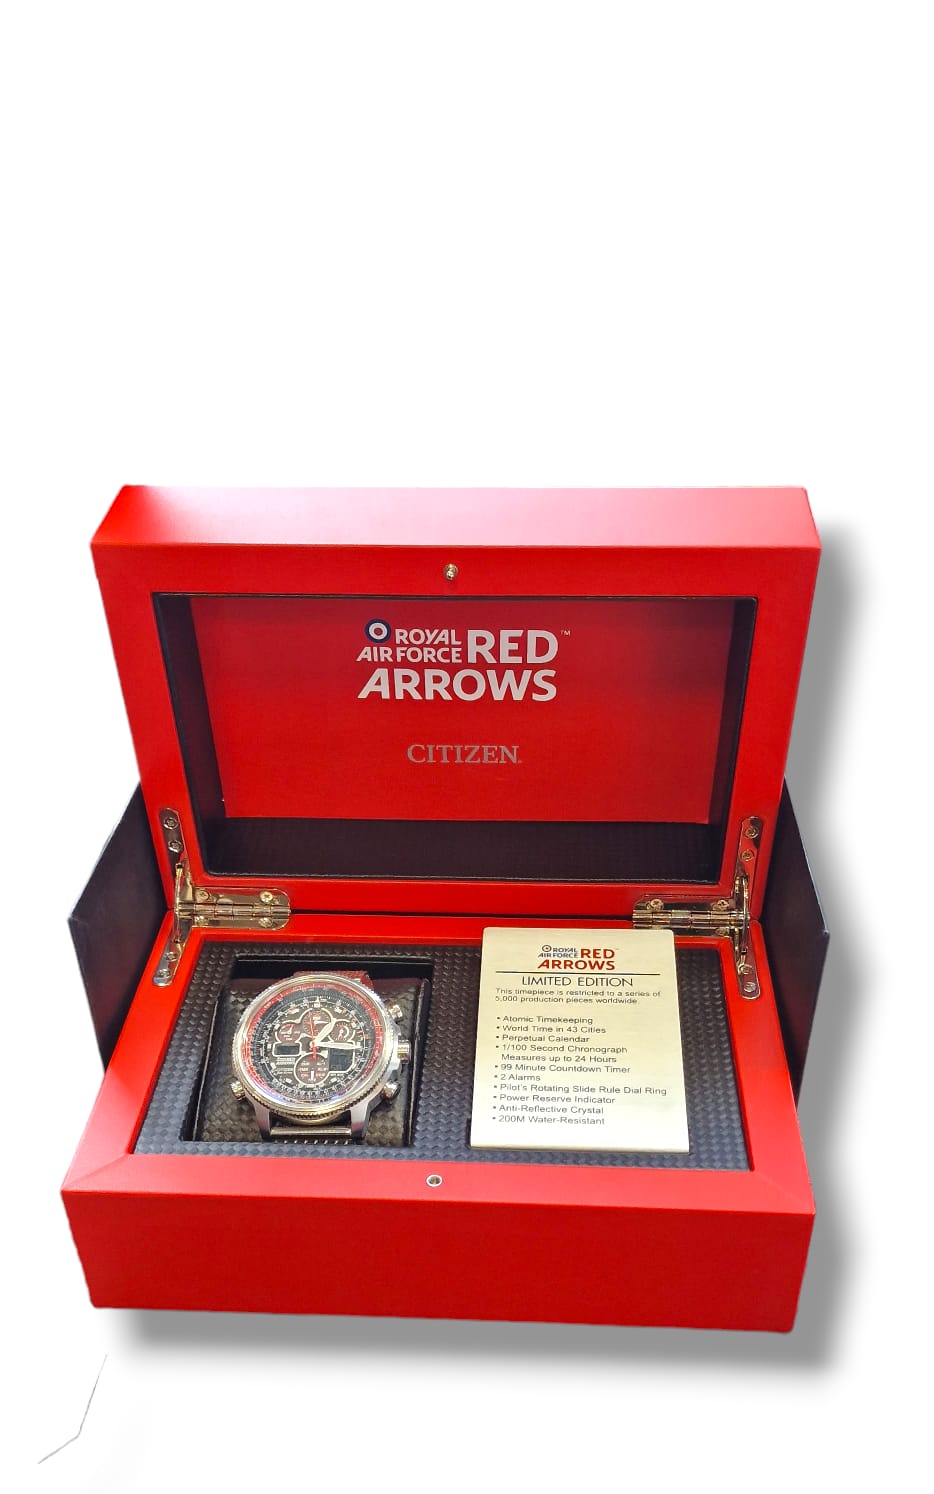 Citizen Red Arrows LTD.Edition watch in case